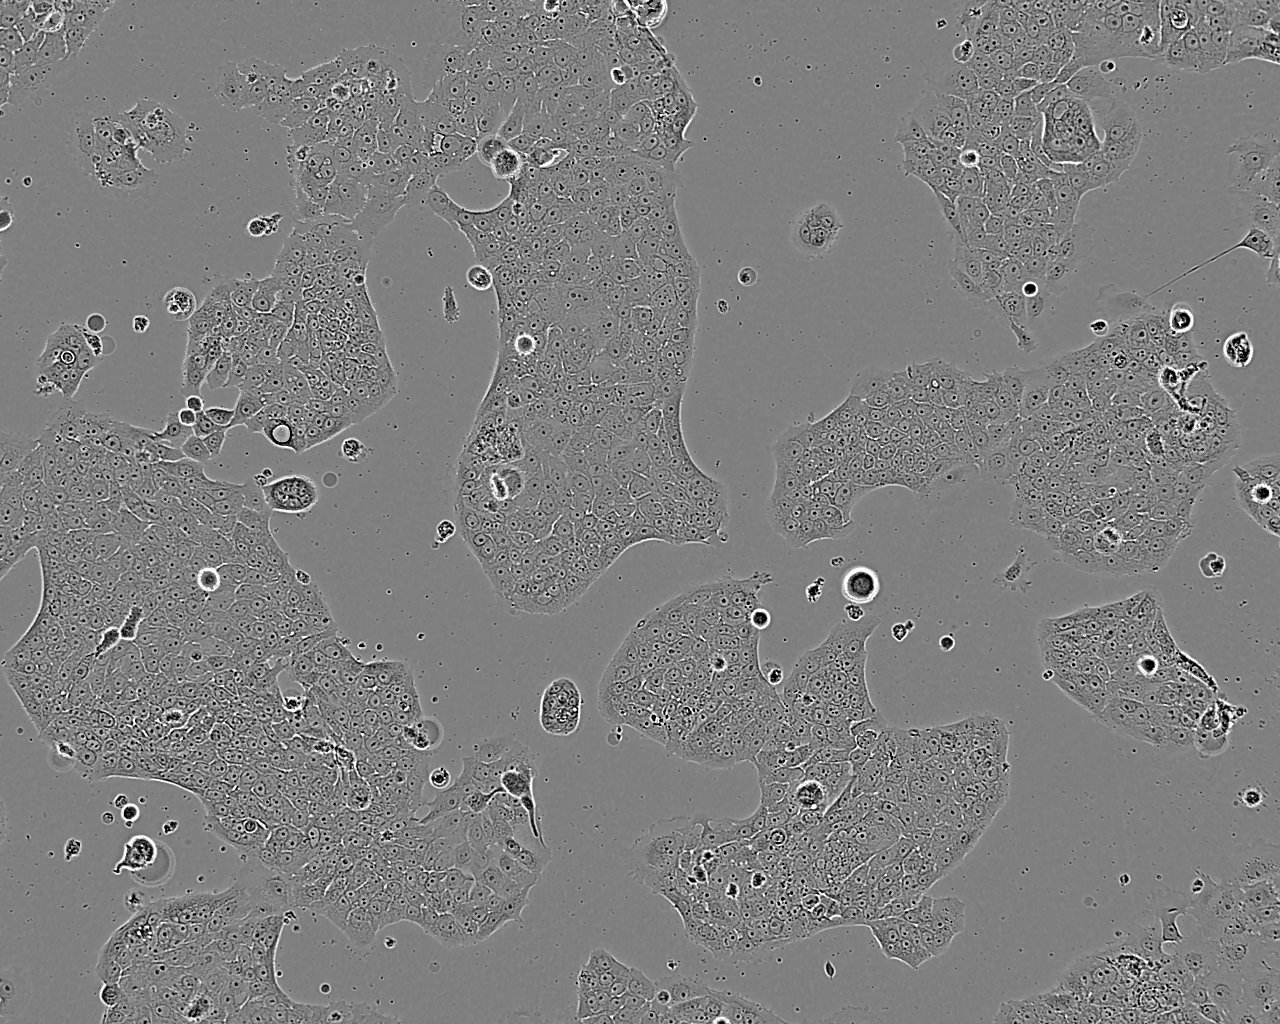 hs 68 epithelioid cells男性正常龟头细胞系